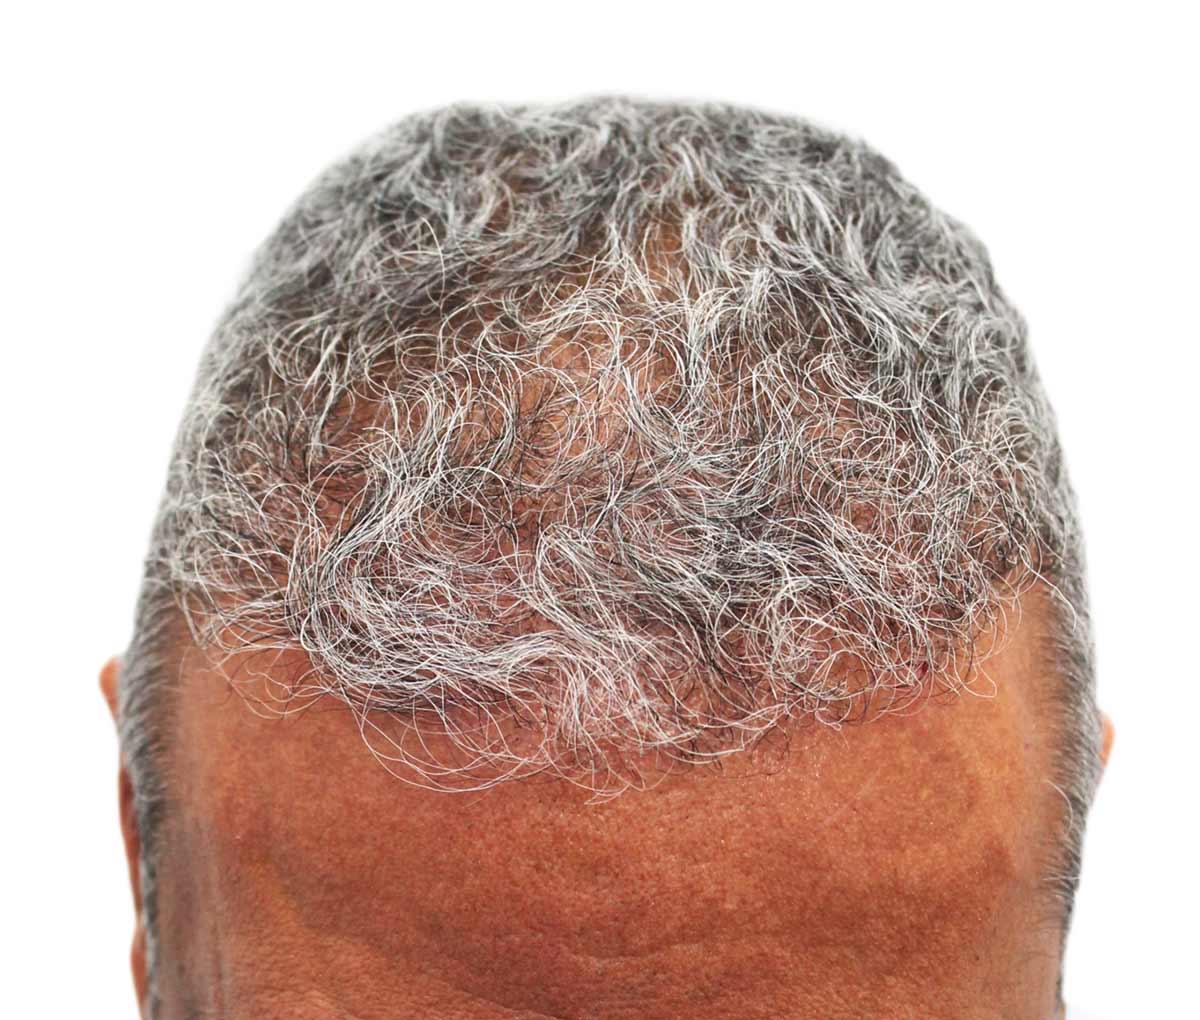 un primer plano de la cabeza de un hombre con cabello gris.